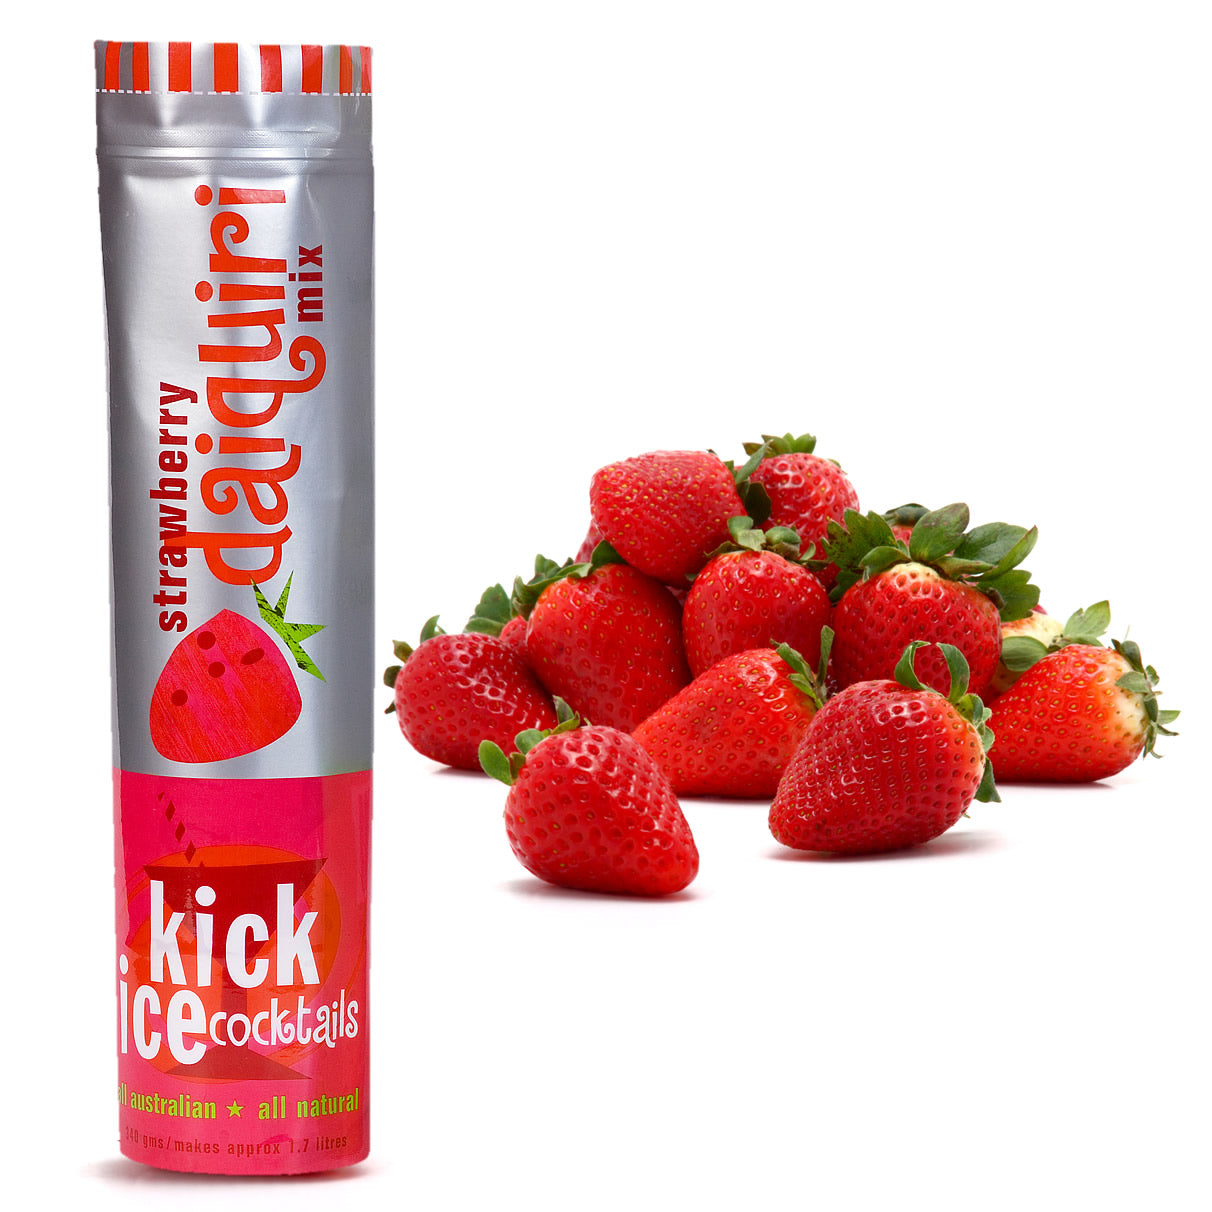 Kick Ice Cocktails - Strawberry Daiquiri